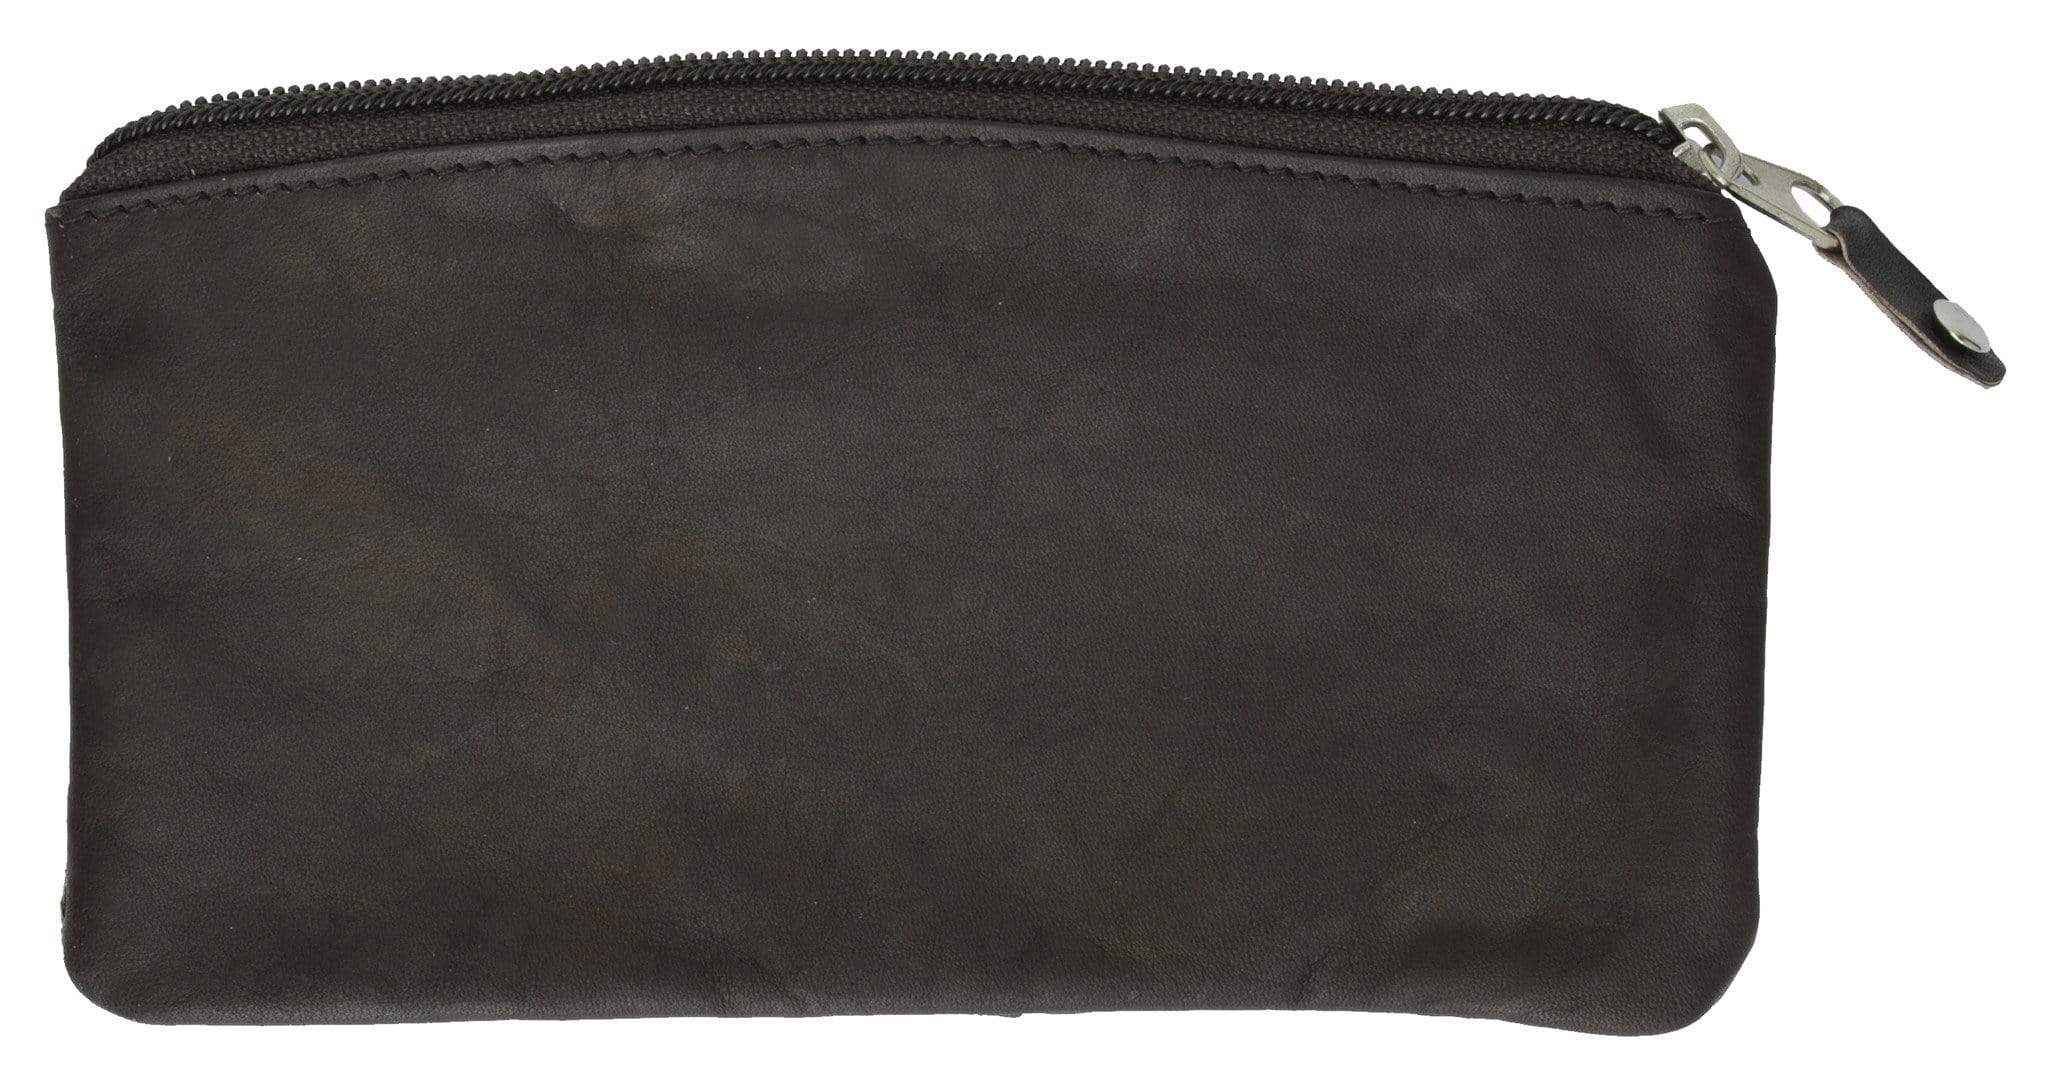 marshal black change purse or coupon holder 1516 01 leather wallets for mens